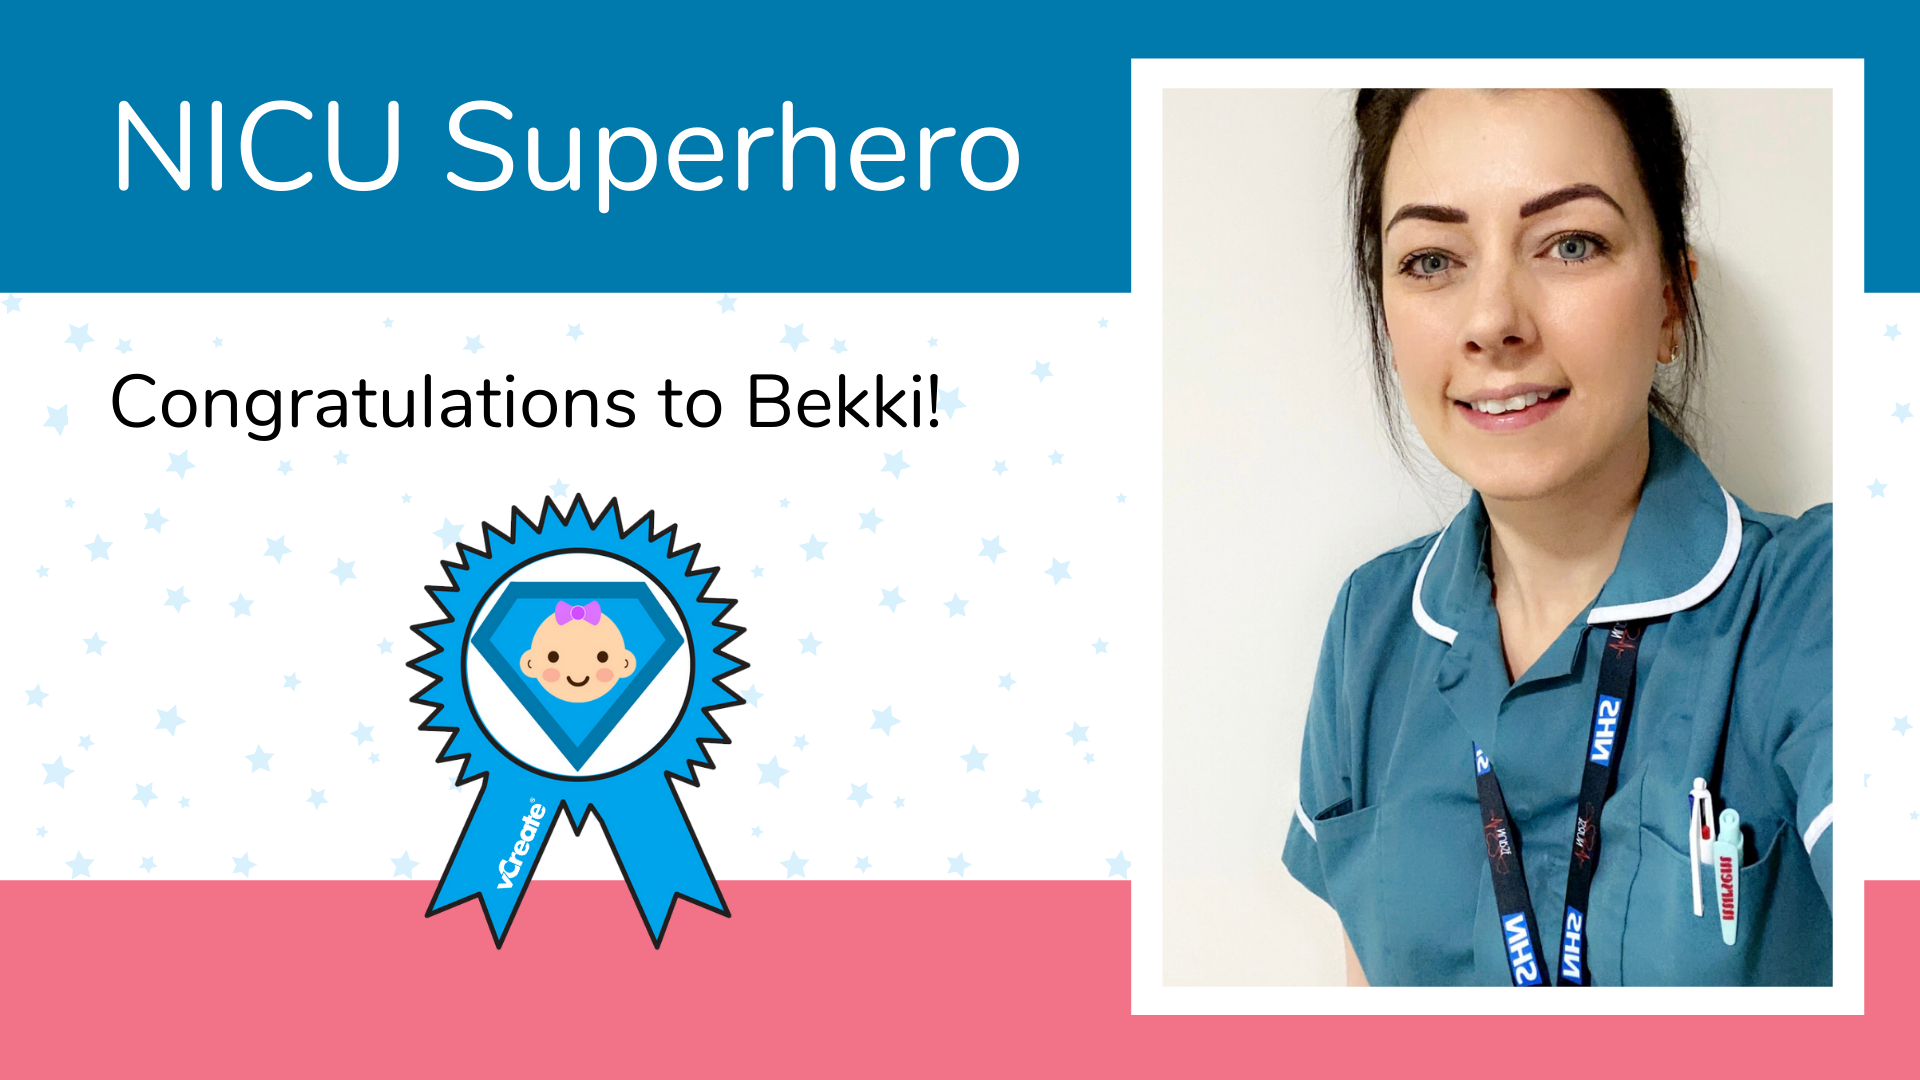 Our NICU Superhero this week is Bekki from the Royal Stoke University Hospital!